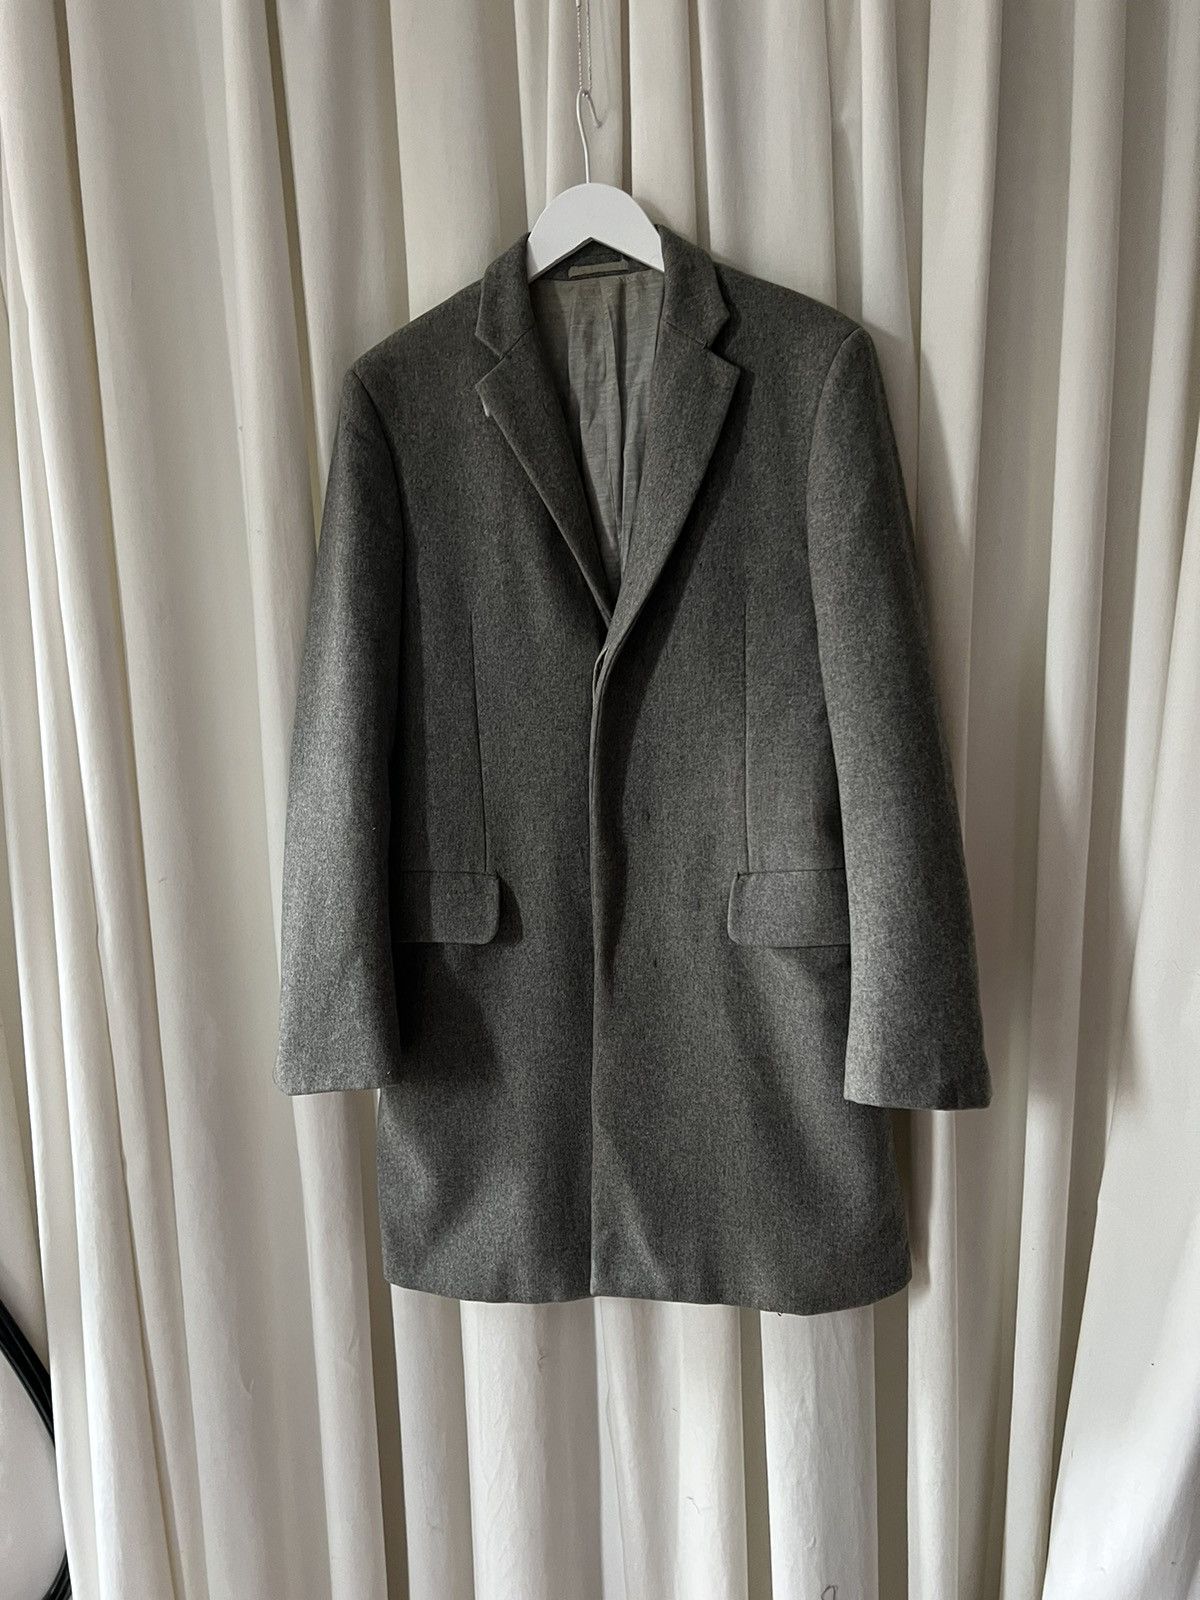 Jil Sander JIL SANDER Tailor Made Grey Wool Coat 48 M | Grailed